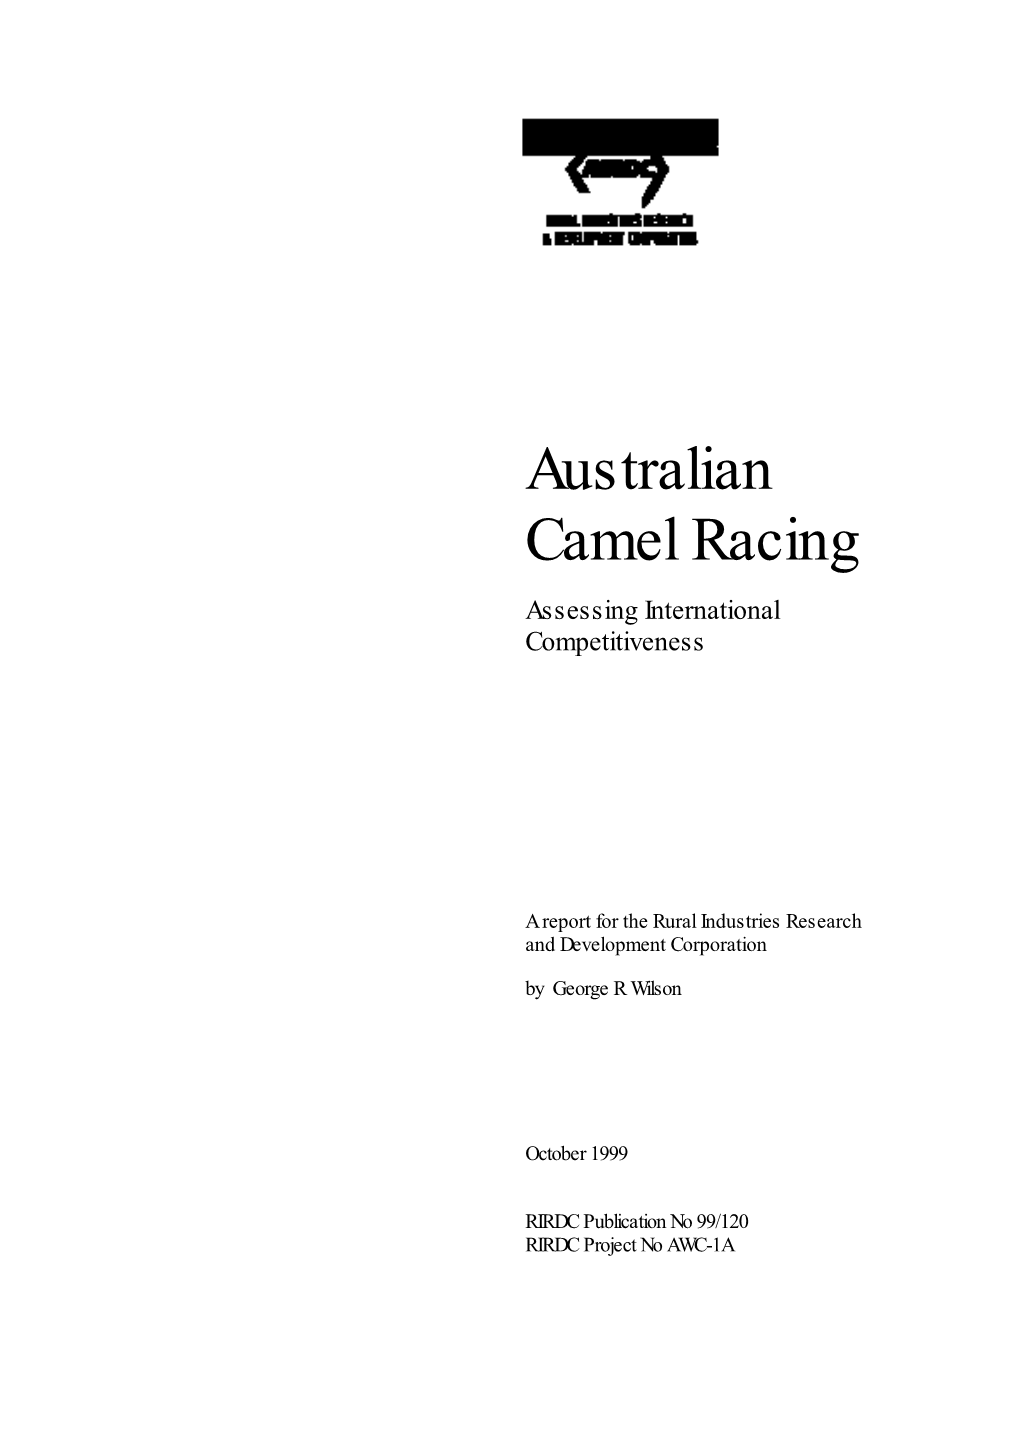 Australian Camel Racing Assessing International Competitiveness